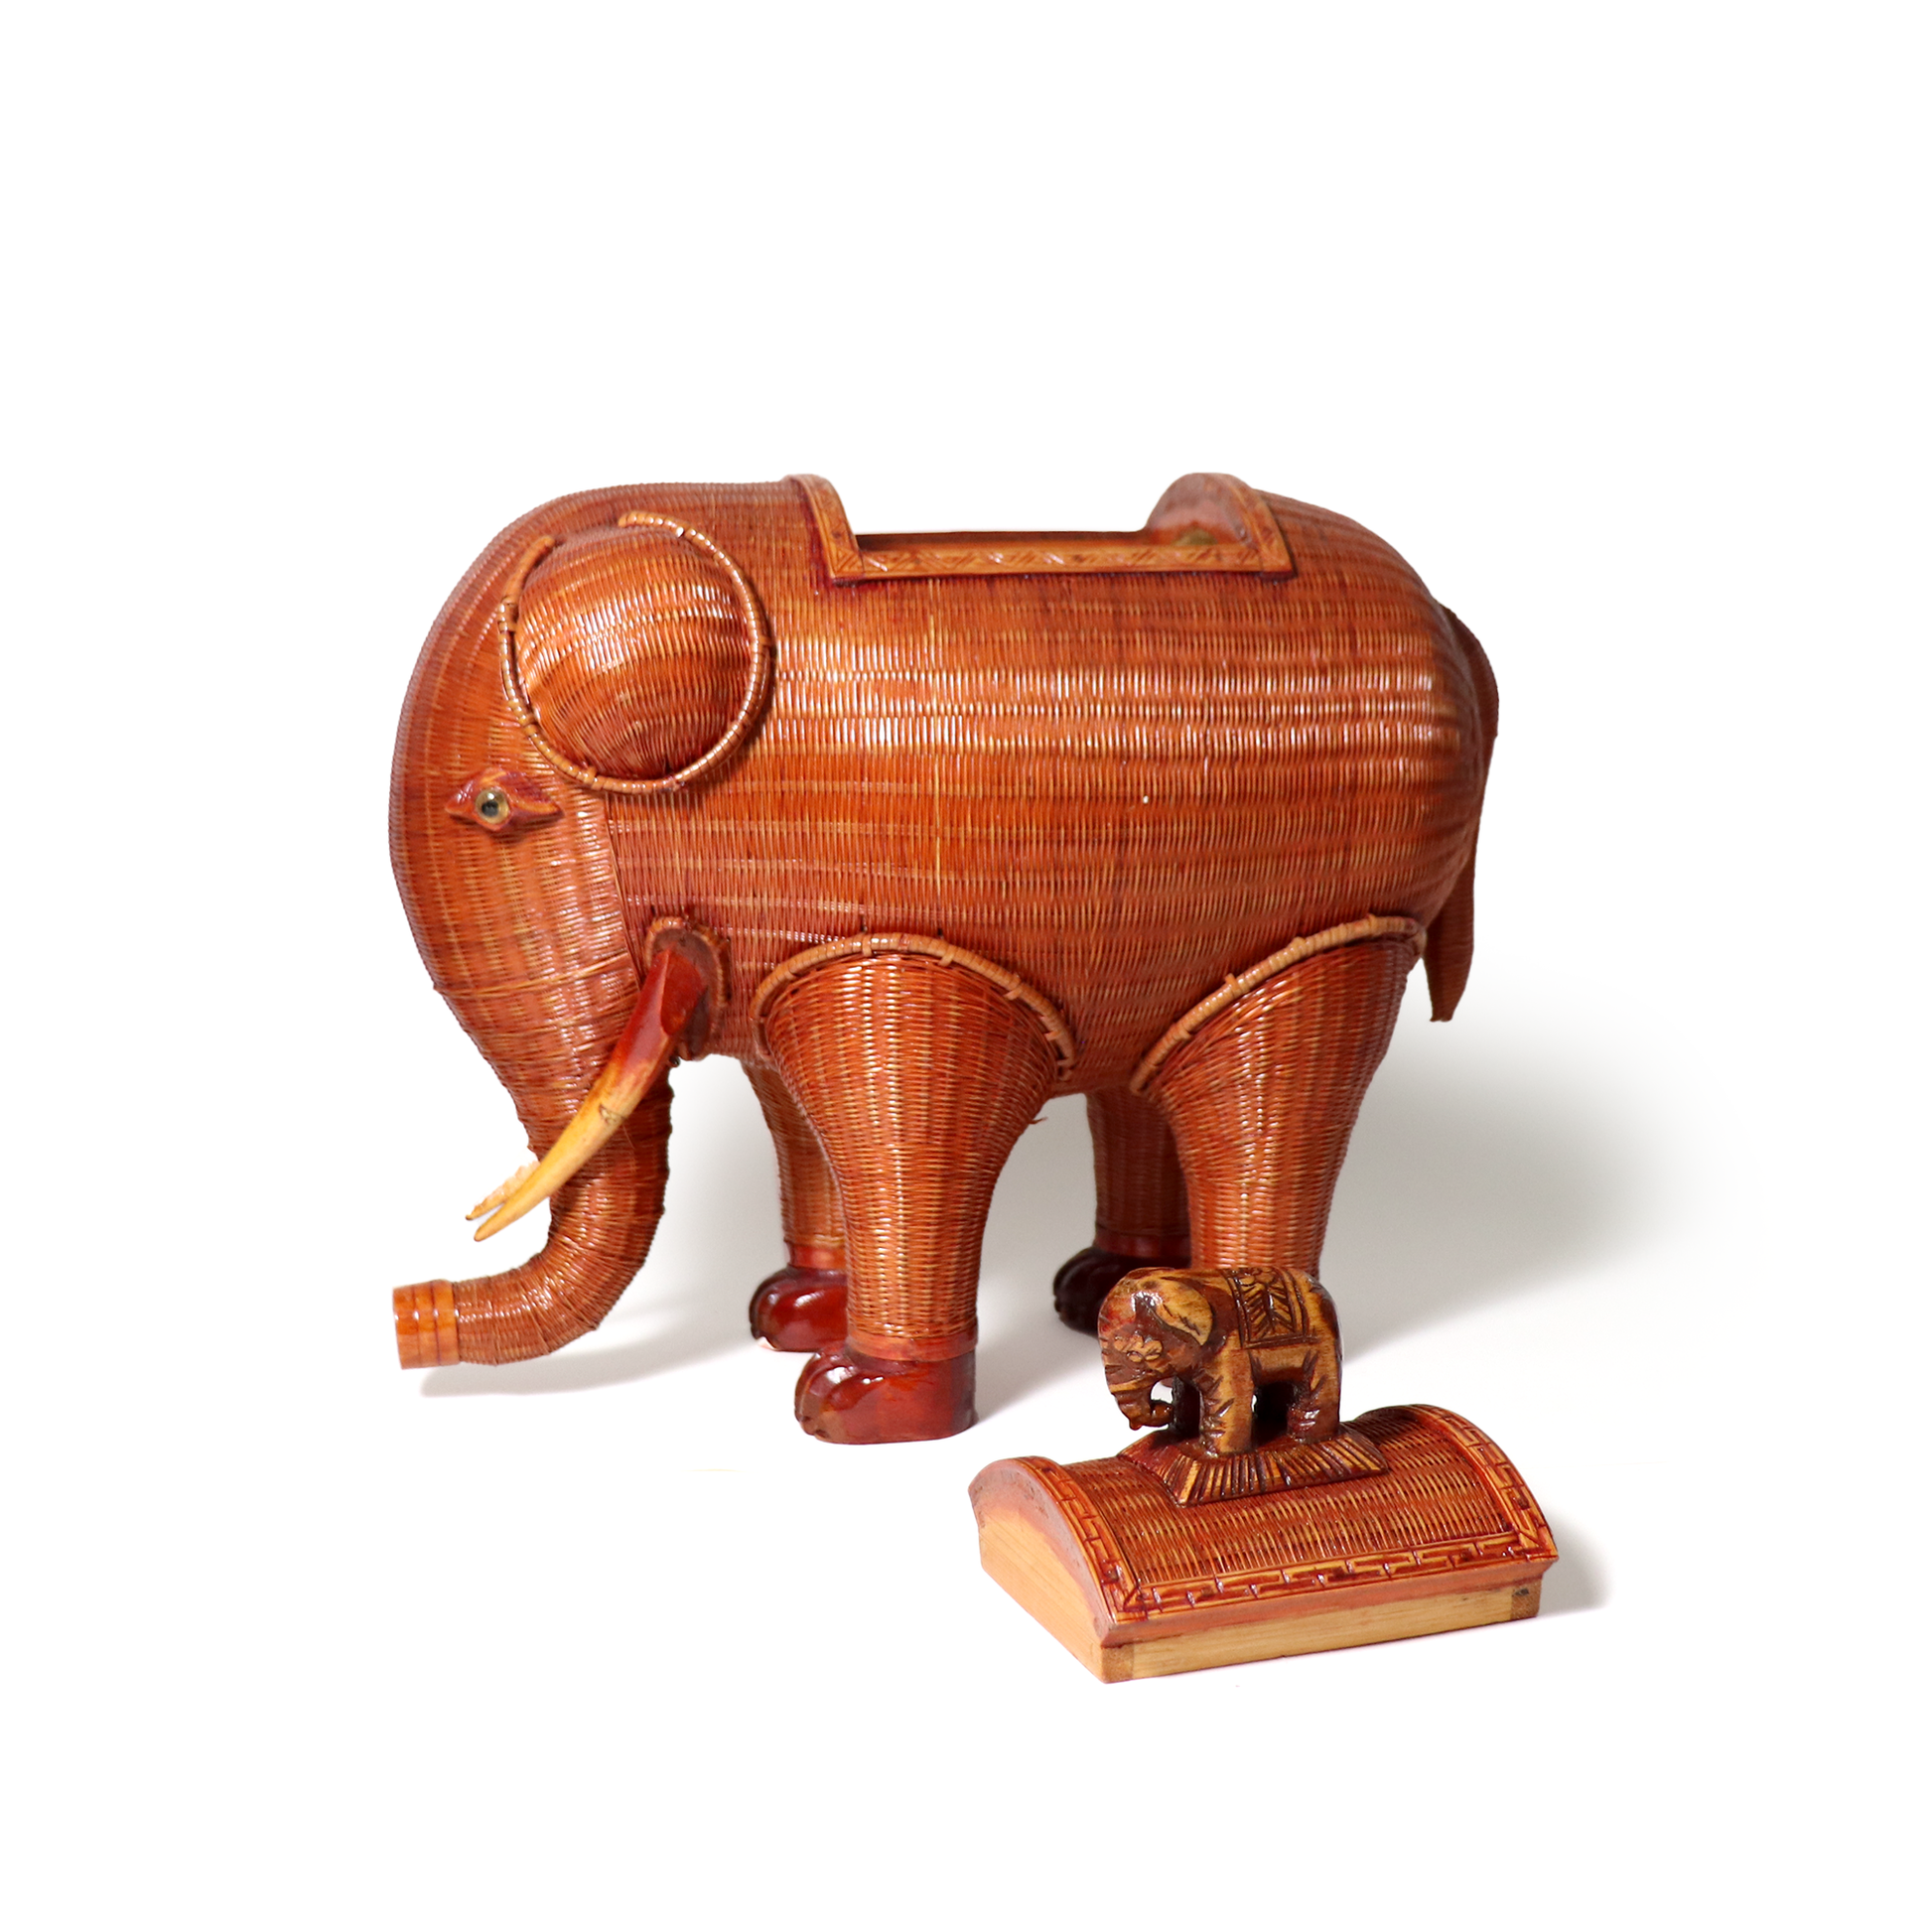 Zhejiang Handicrafts elephant box